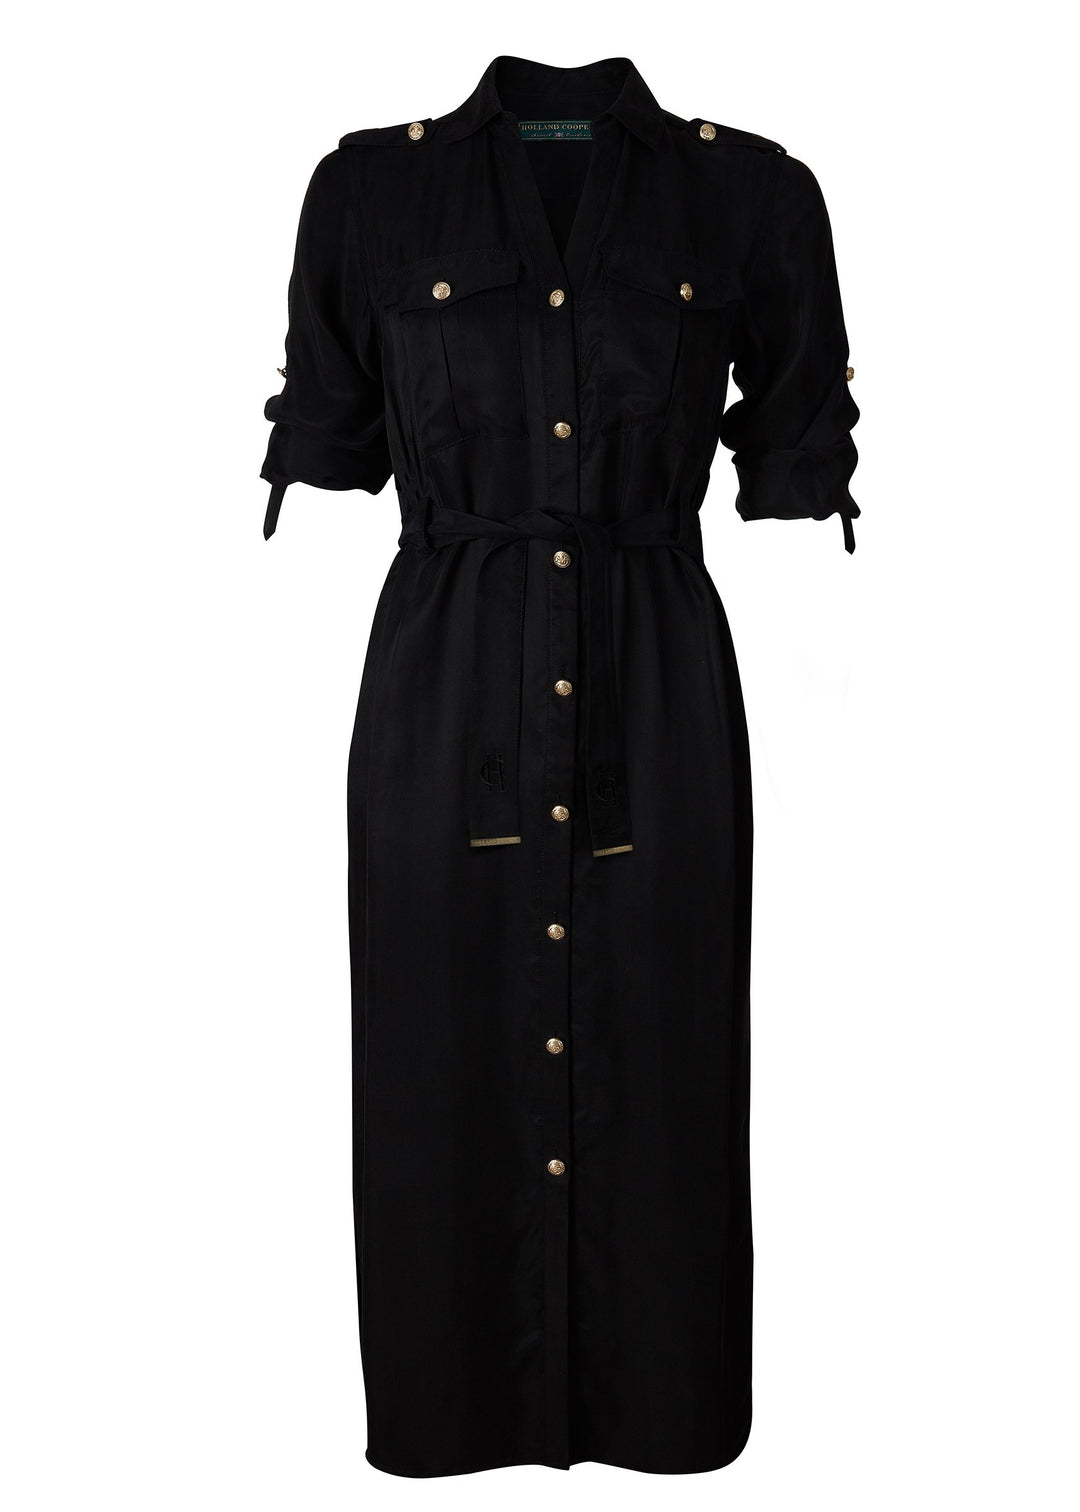 Military Midi Dress (Black) – Holland Cooper